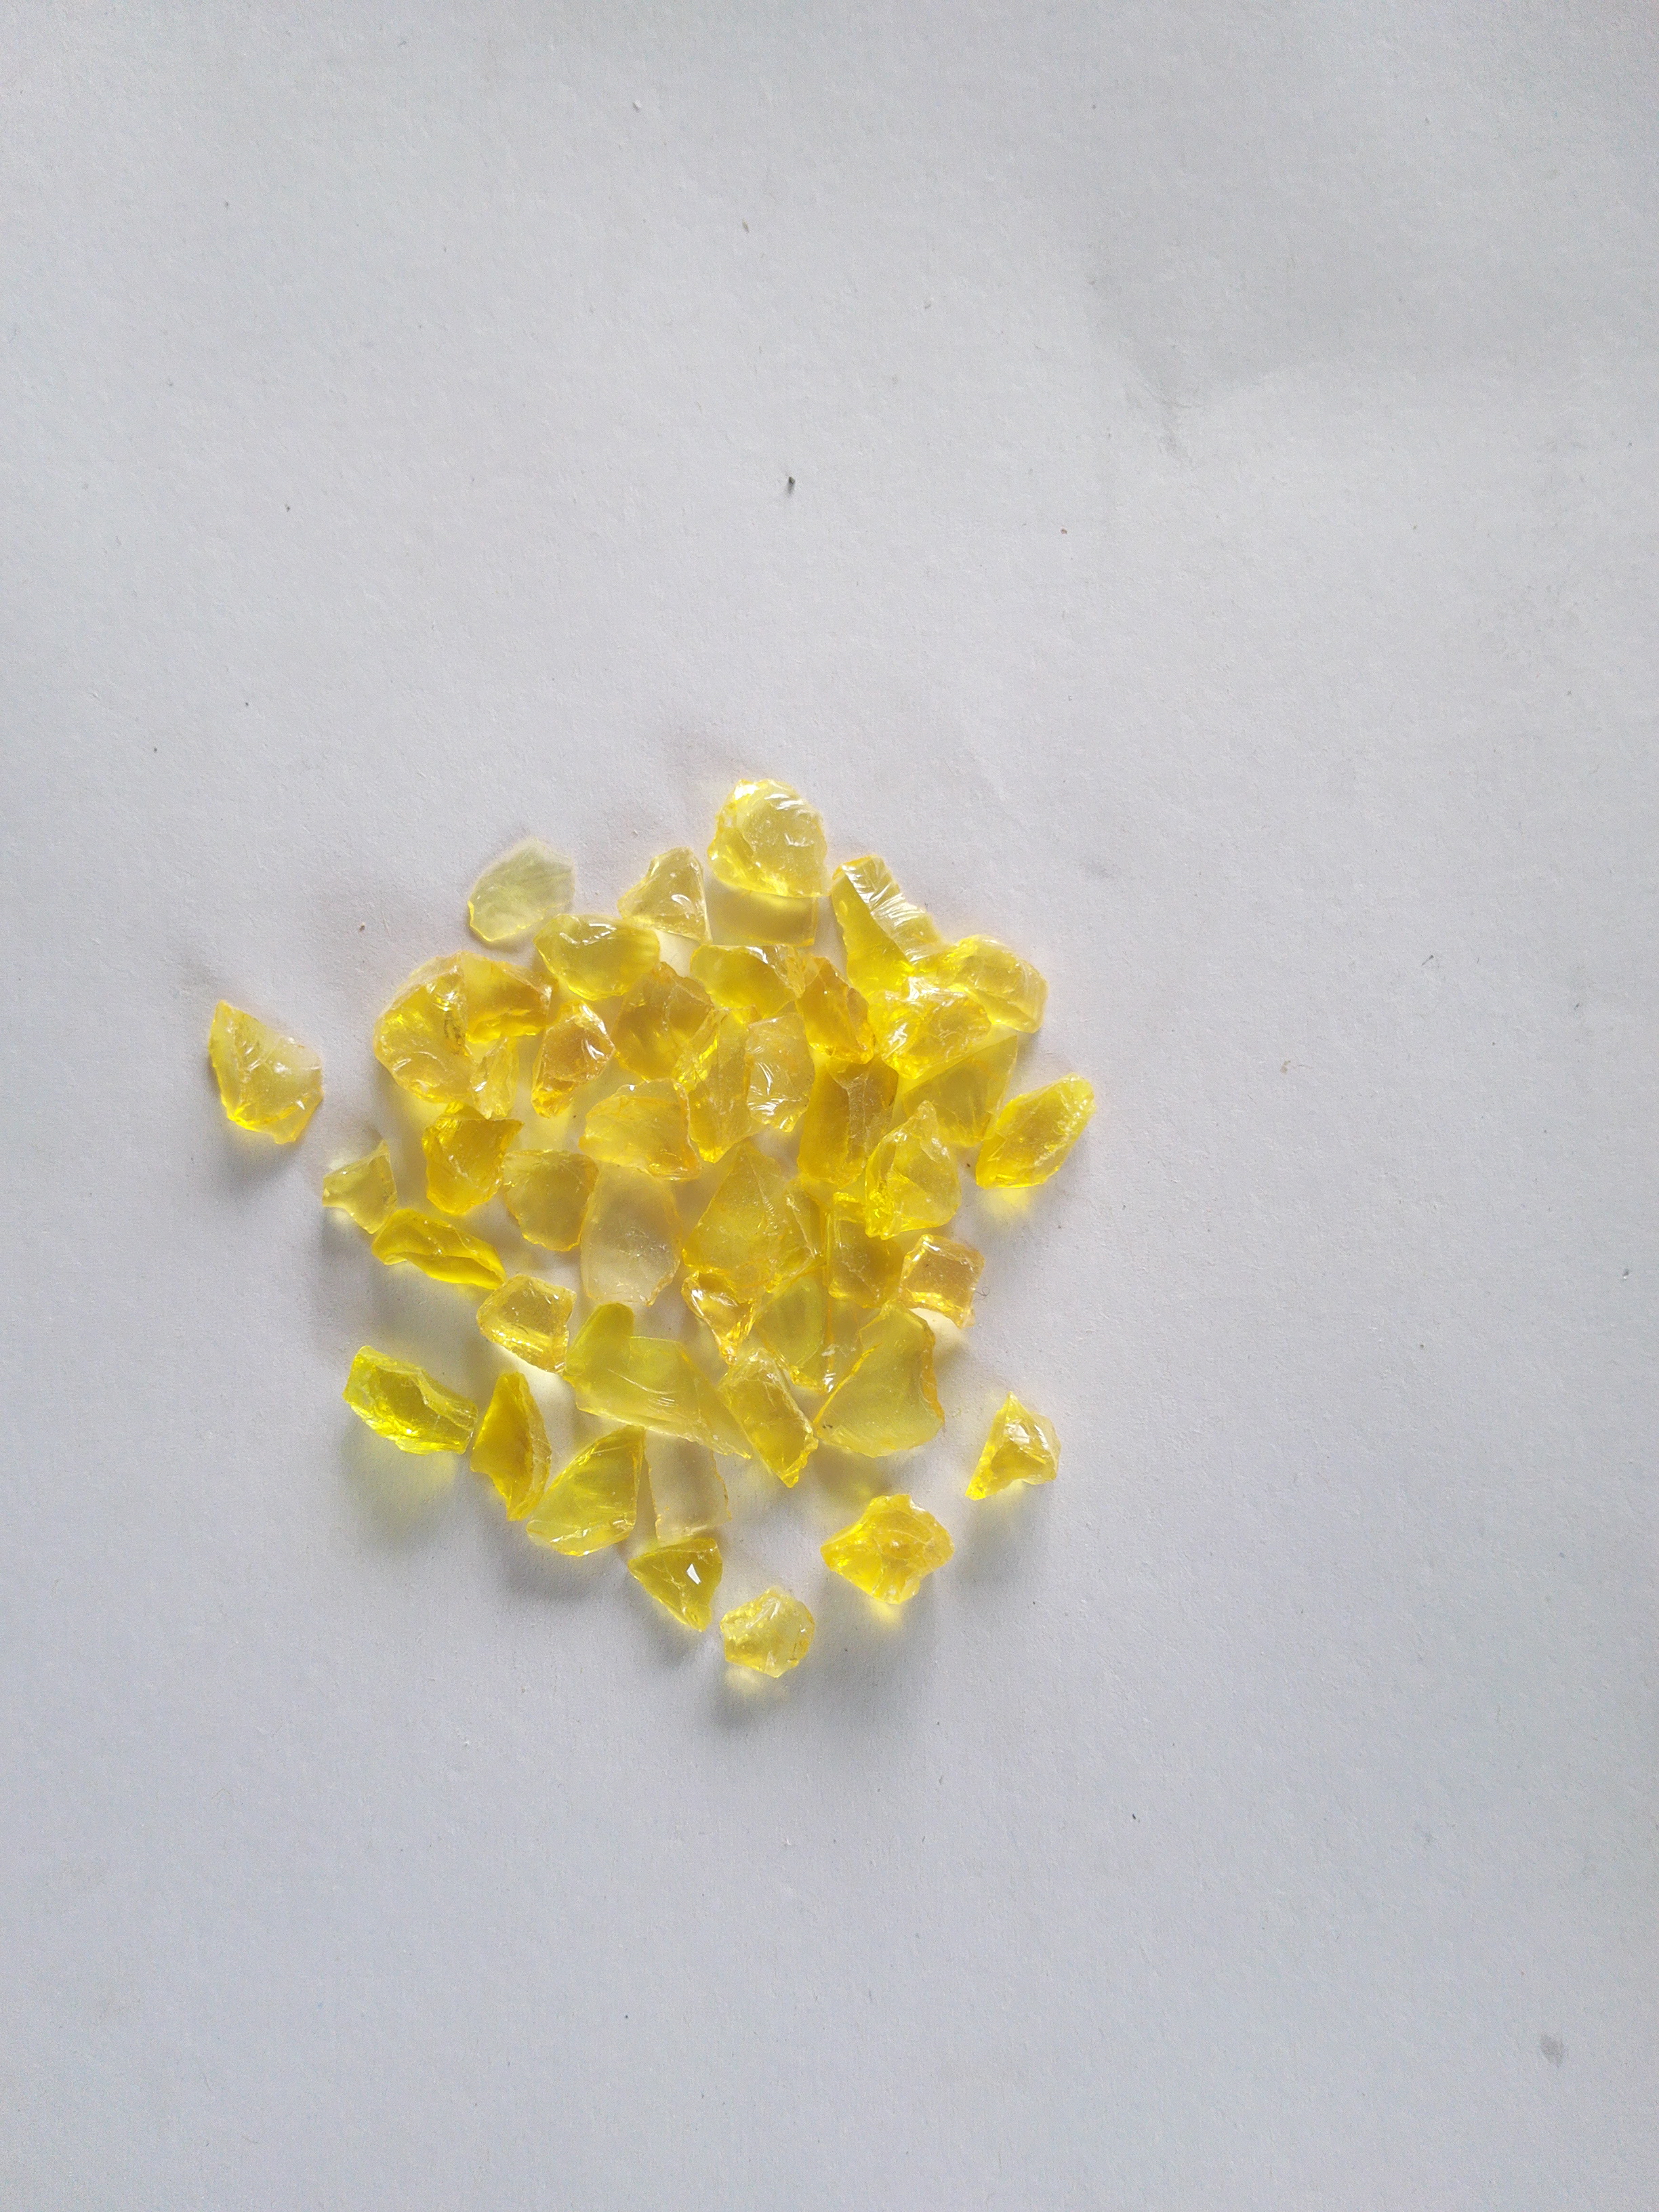 hamari黄色琉璃砂批发鱼缸装饰造景 黄色琉璃砂水族箱饰品底沙